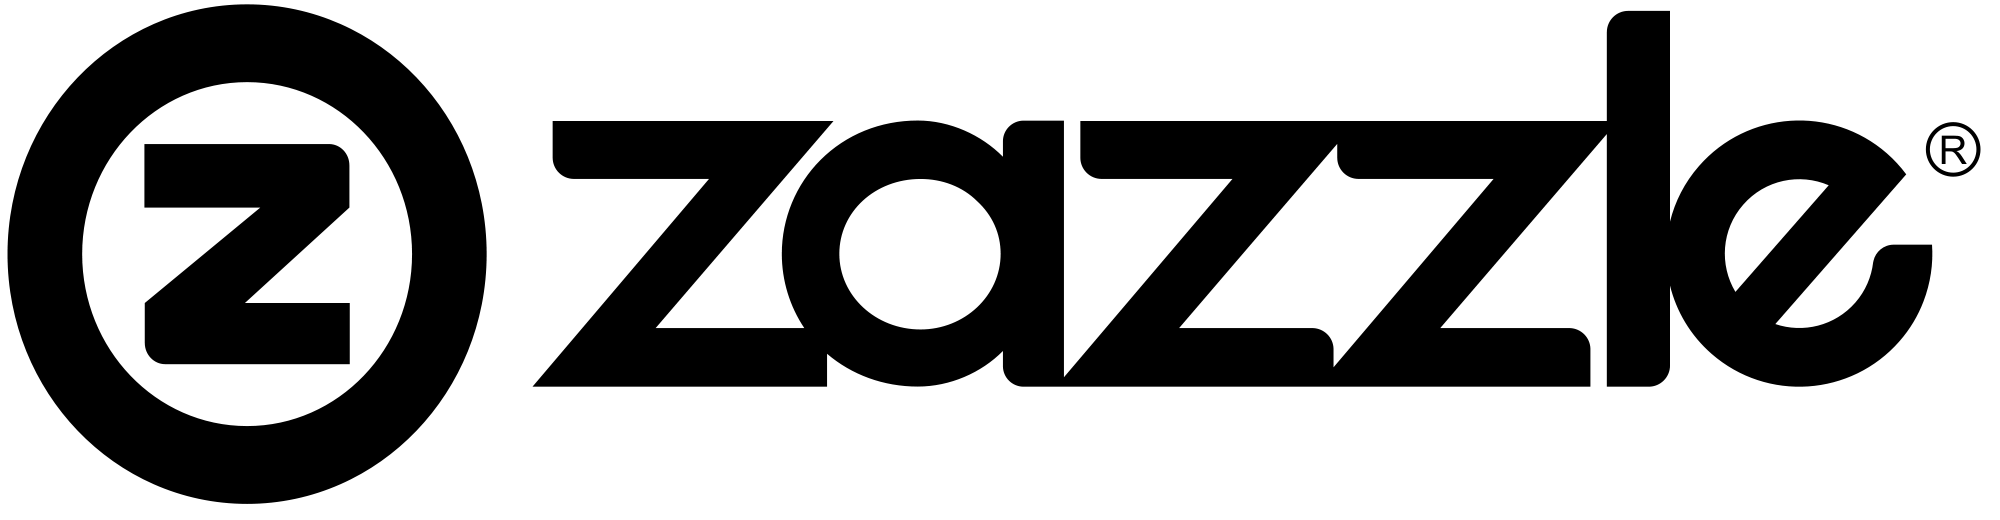 Zazzle Logo - File:Zazzle logo.svg - Wikimedia Commons